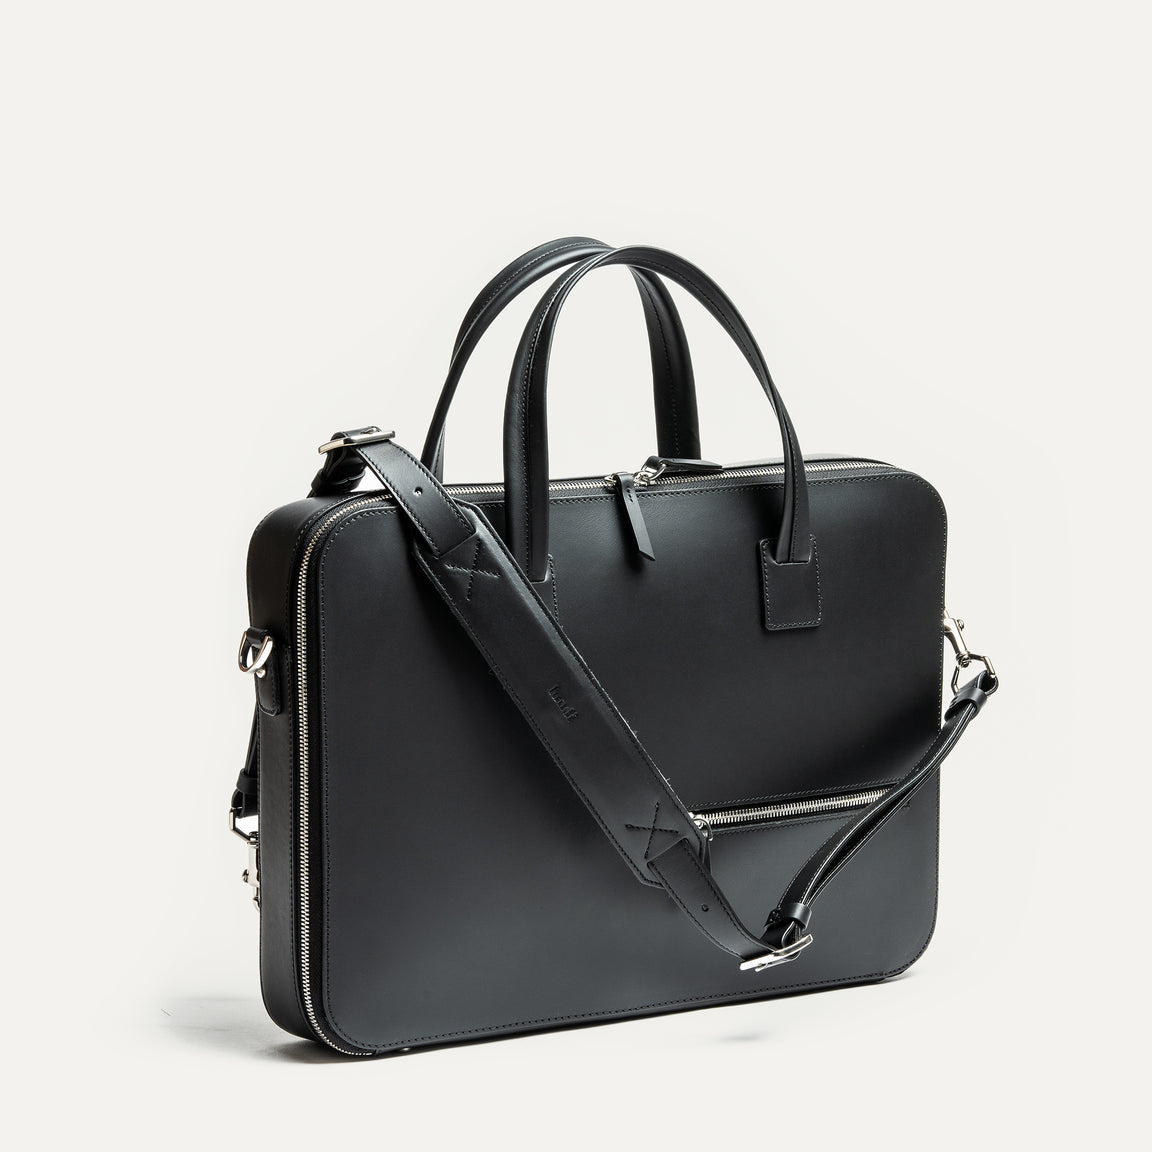 lundi - Minimalist and functional leather bag